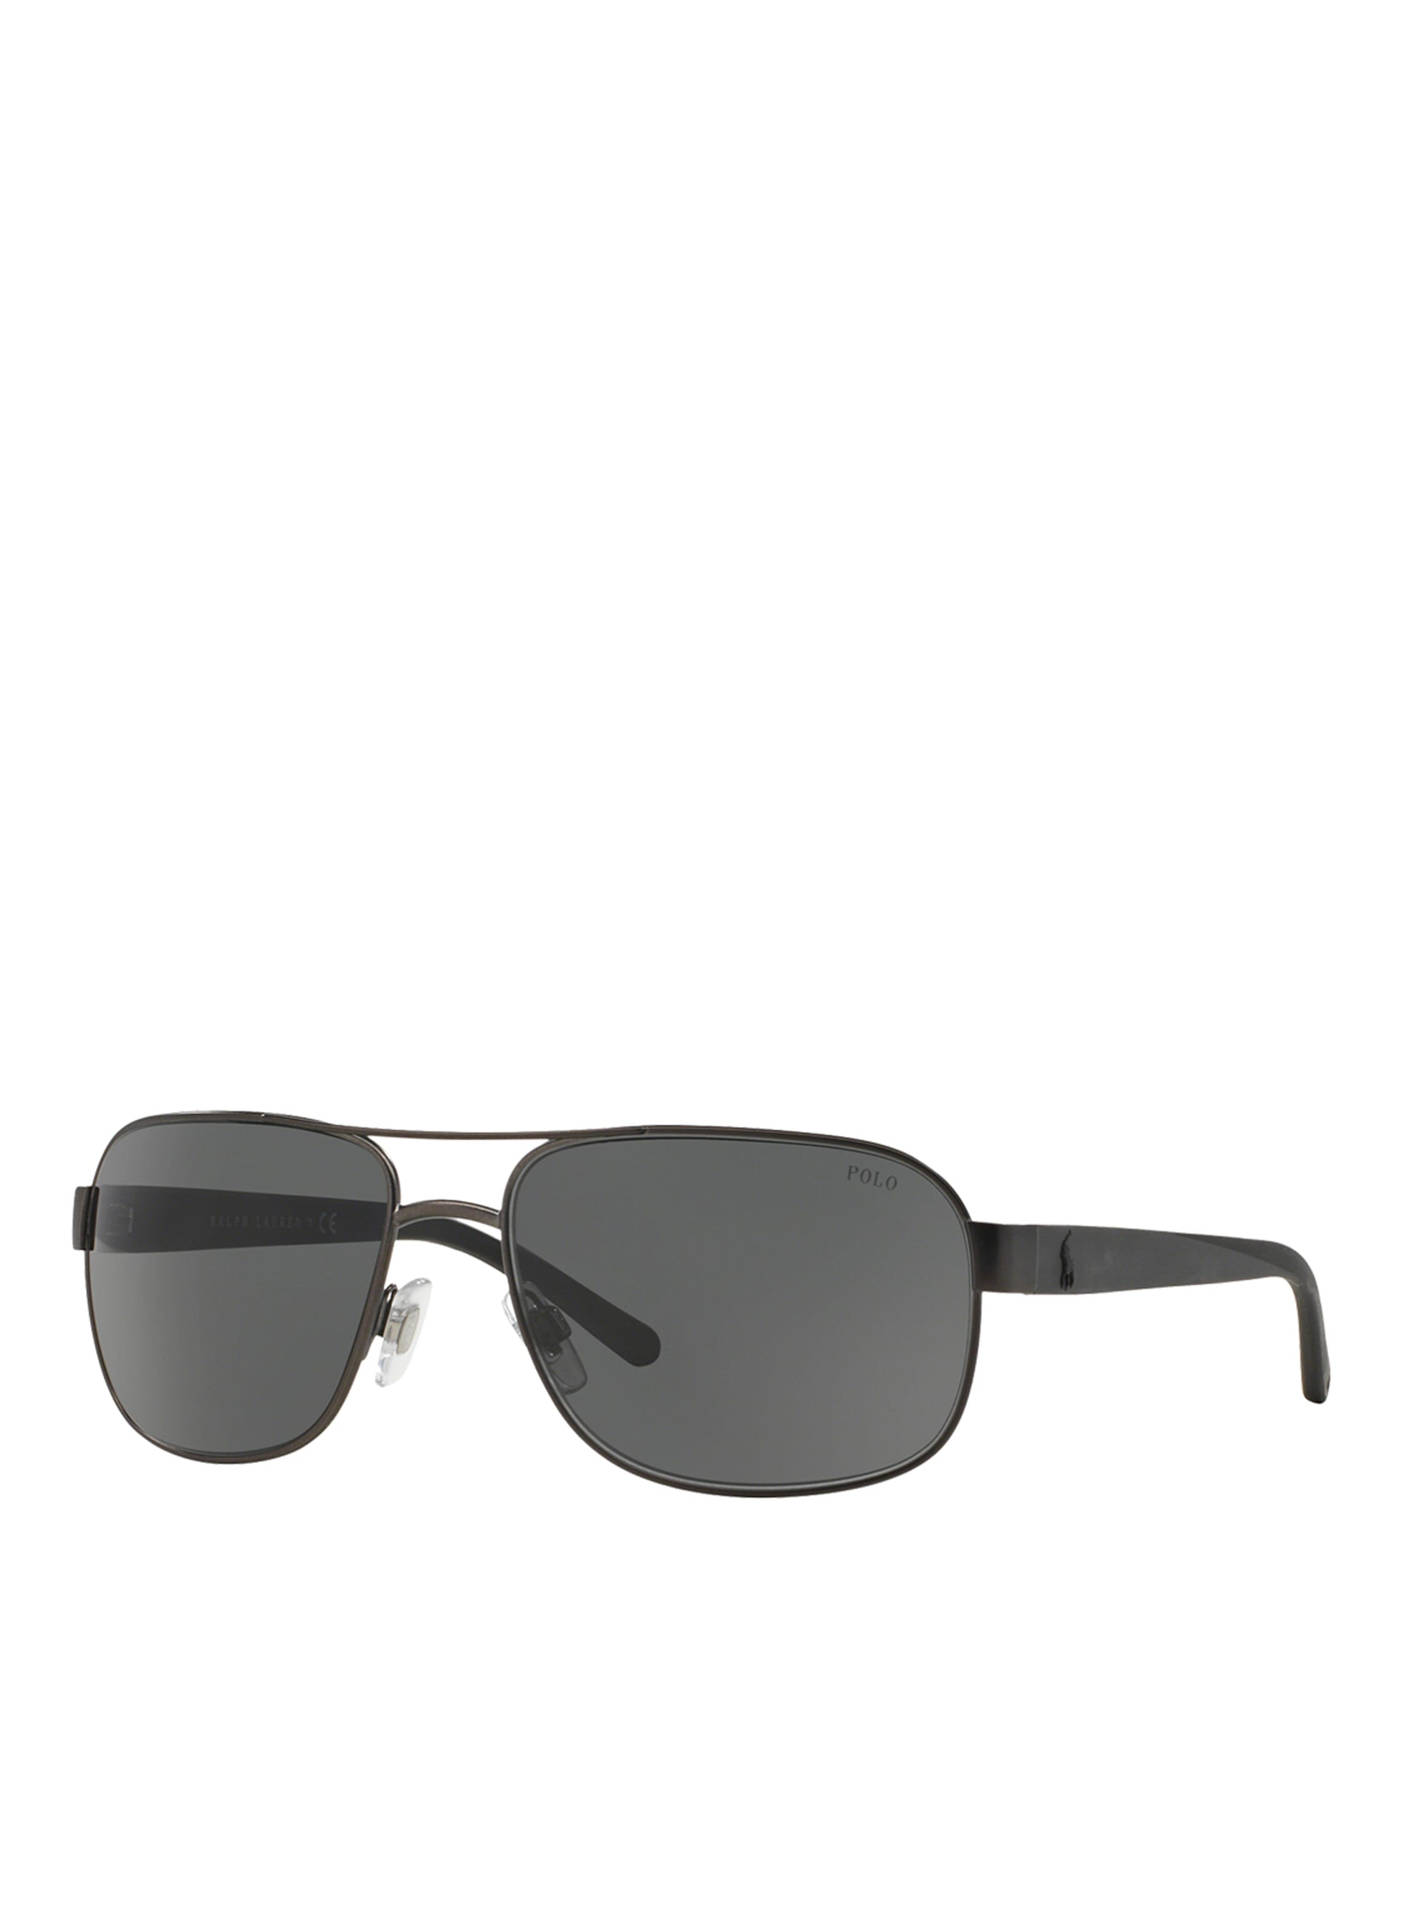 Polo Sunglasses Black Lenses Wallpaper